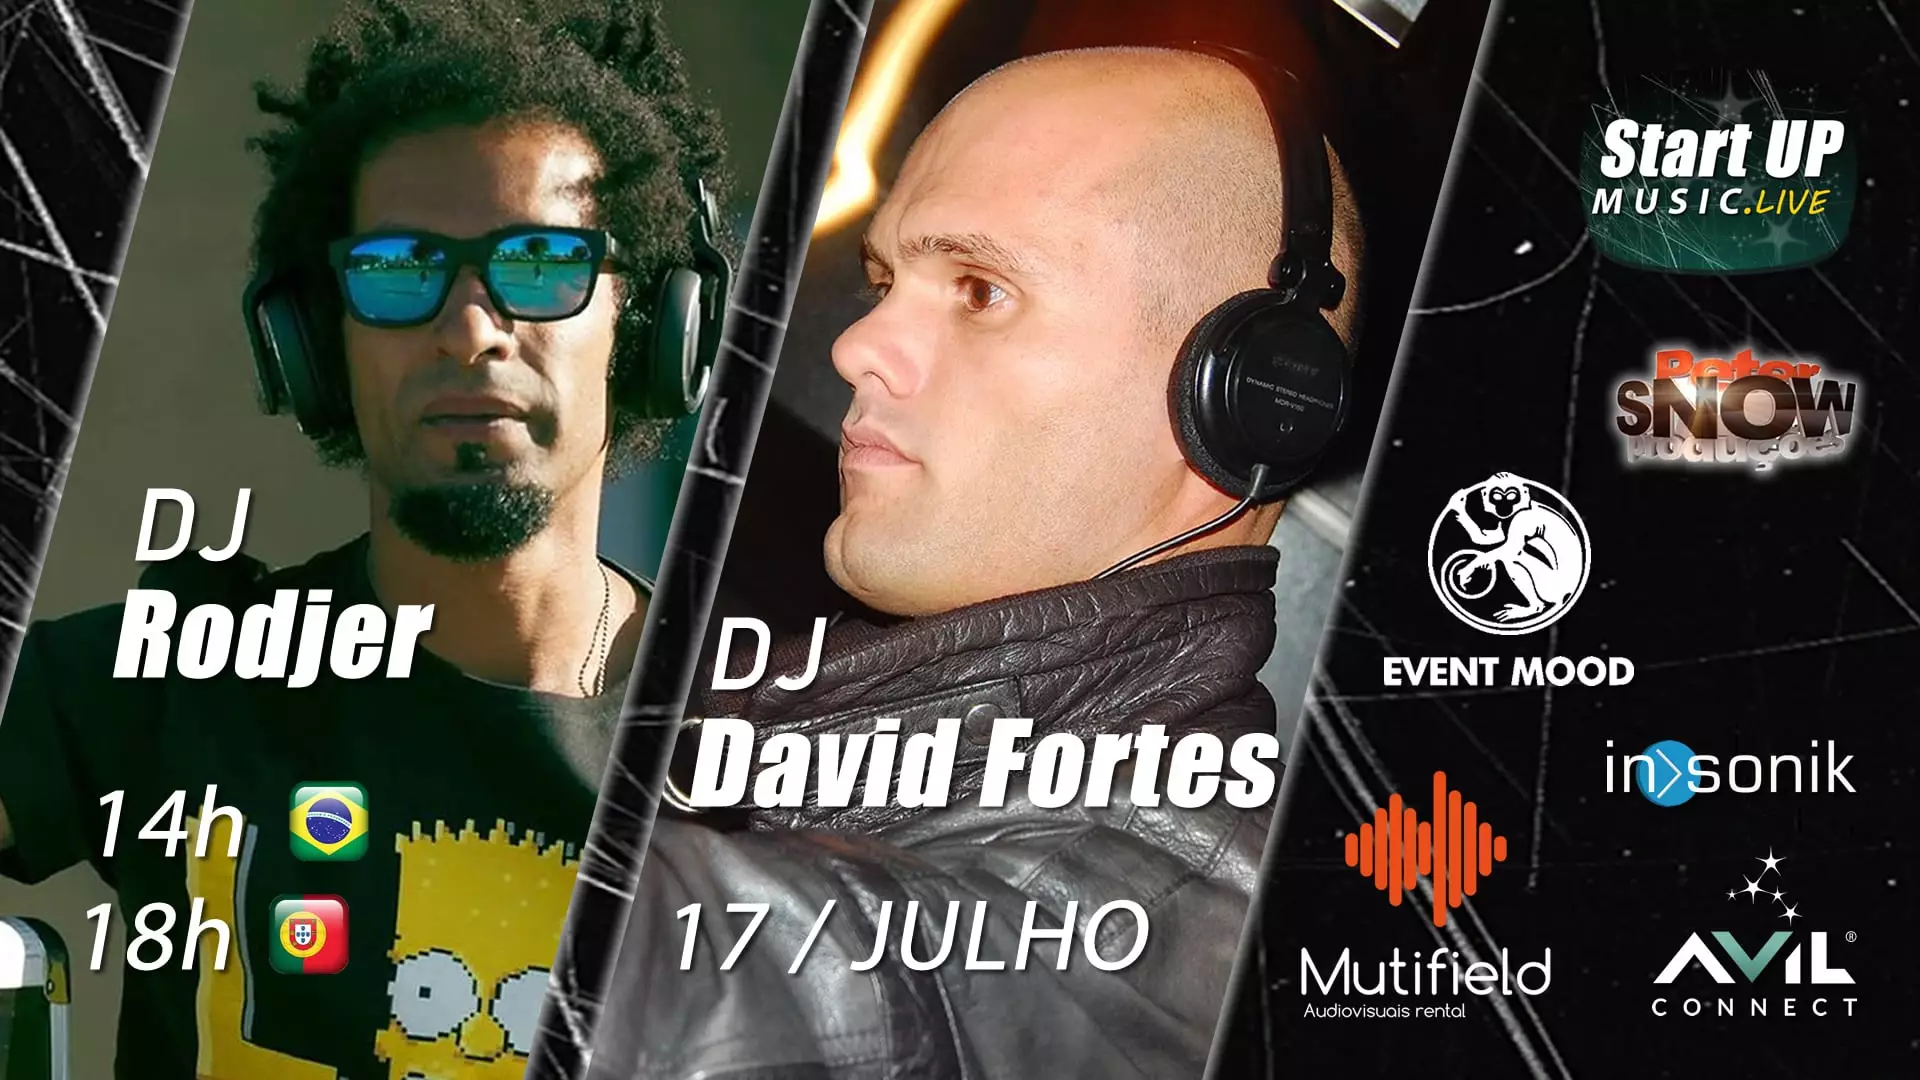 Startup Music Live DJ Rodjer + DJ David Fortes